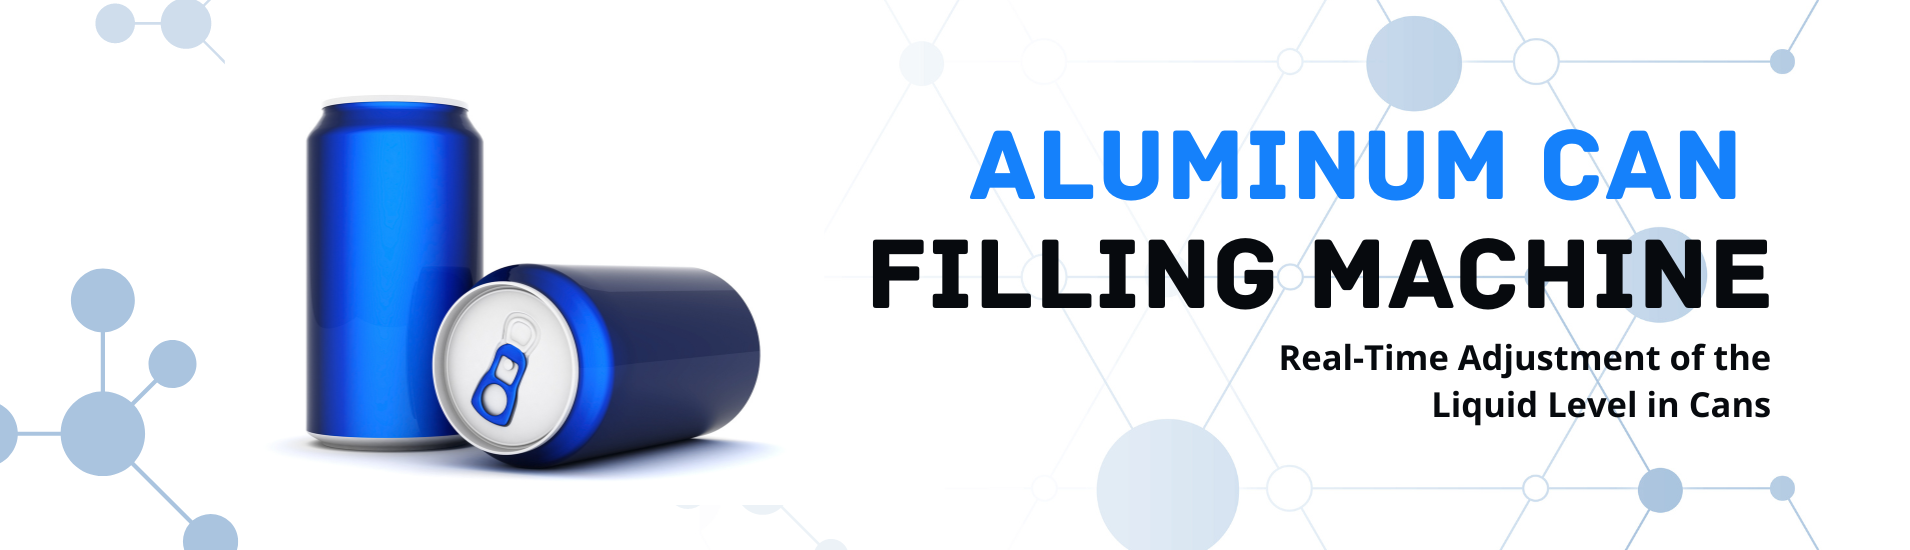 aluminum can filling machine